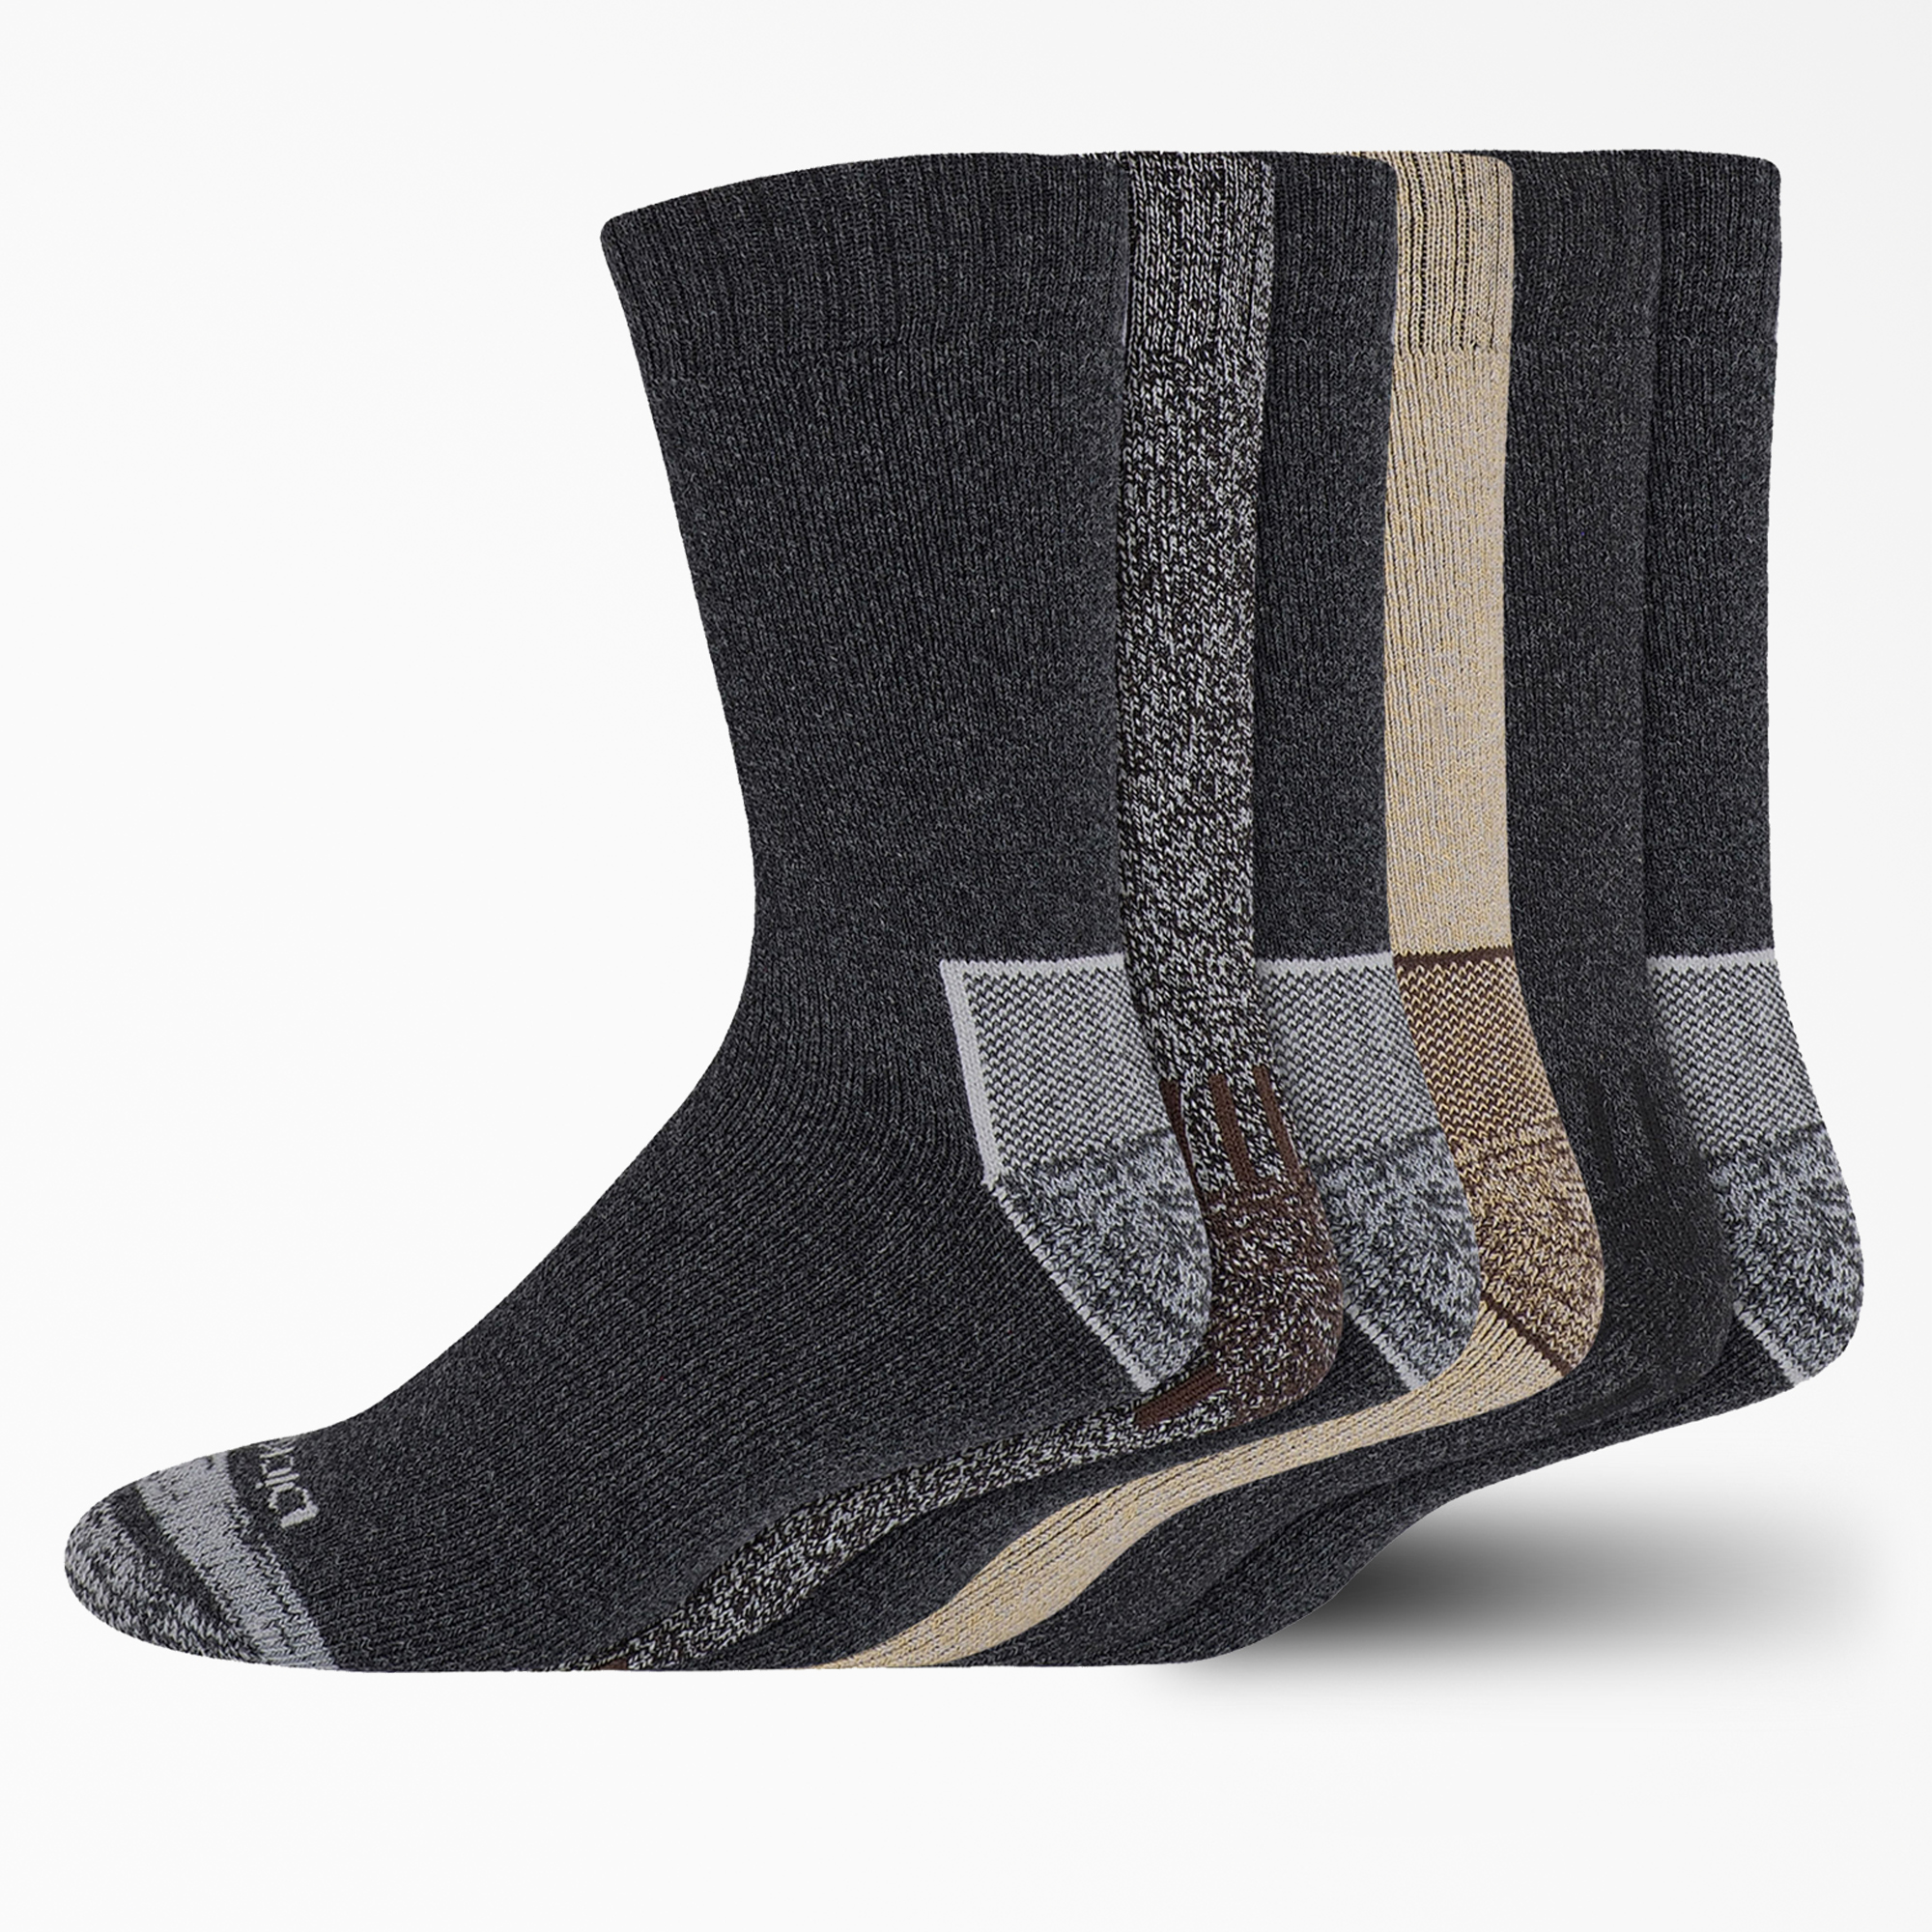 Outdoor Moisture Control Socks, 6-Pack - Black (BK)